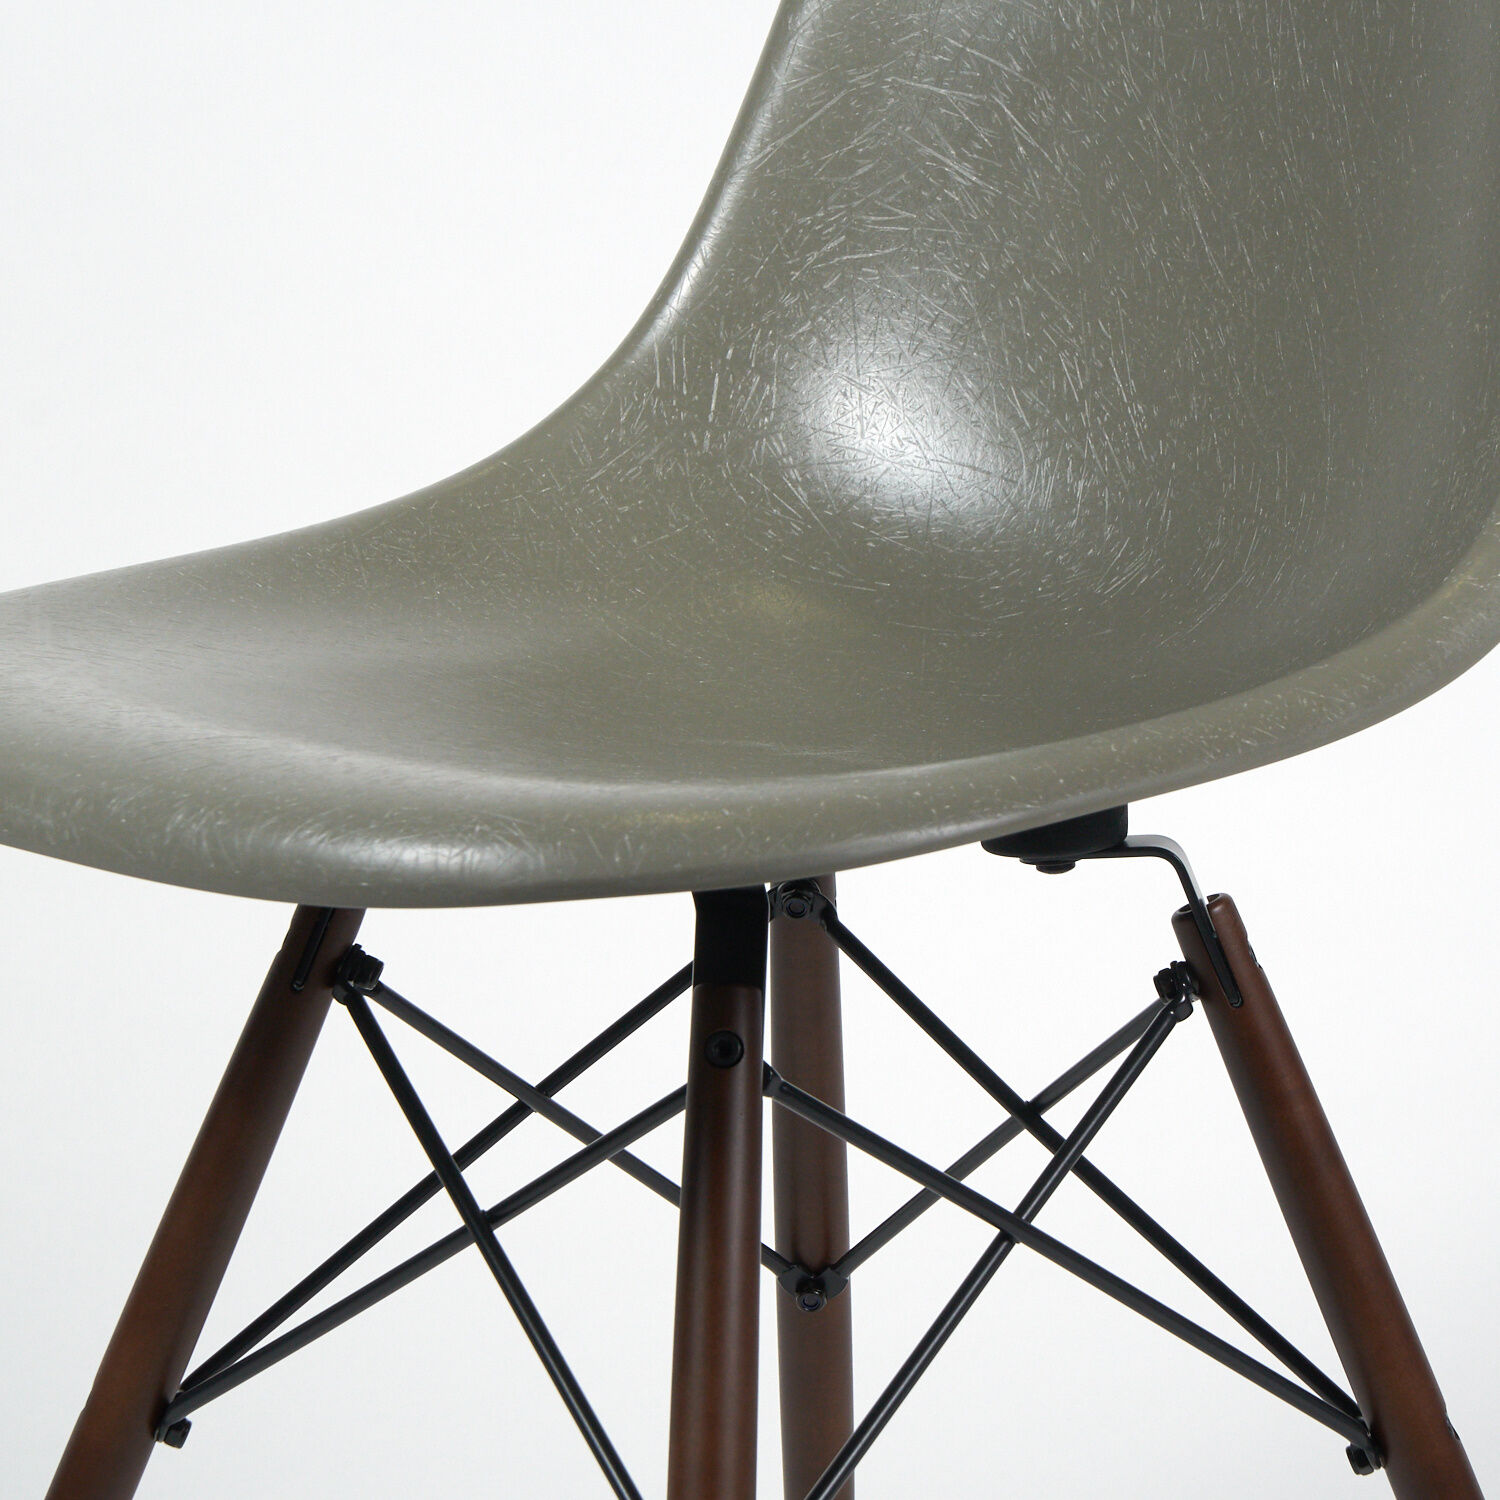 vitra-stuhl-eames-fiberglass-side-chair-dsw-raw-umber-grau-holzgestellt-ahorn-dunkel-mf-0004558-001-2